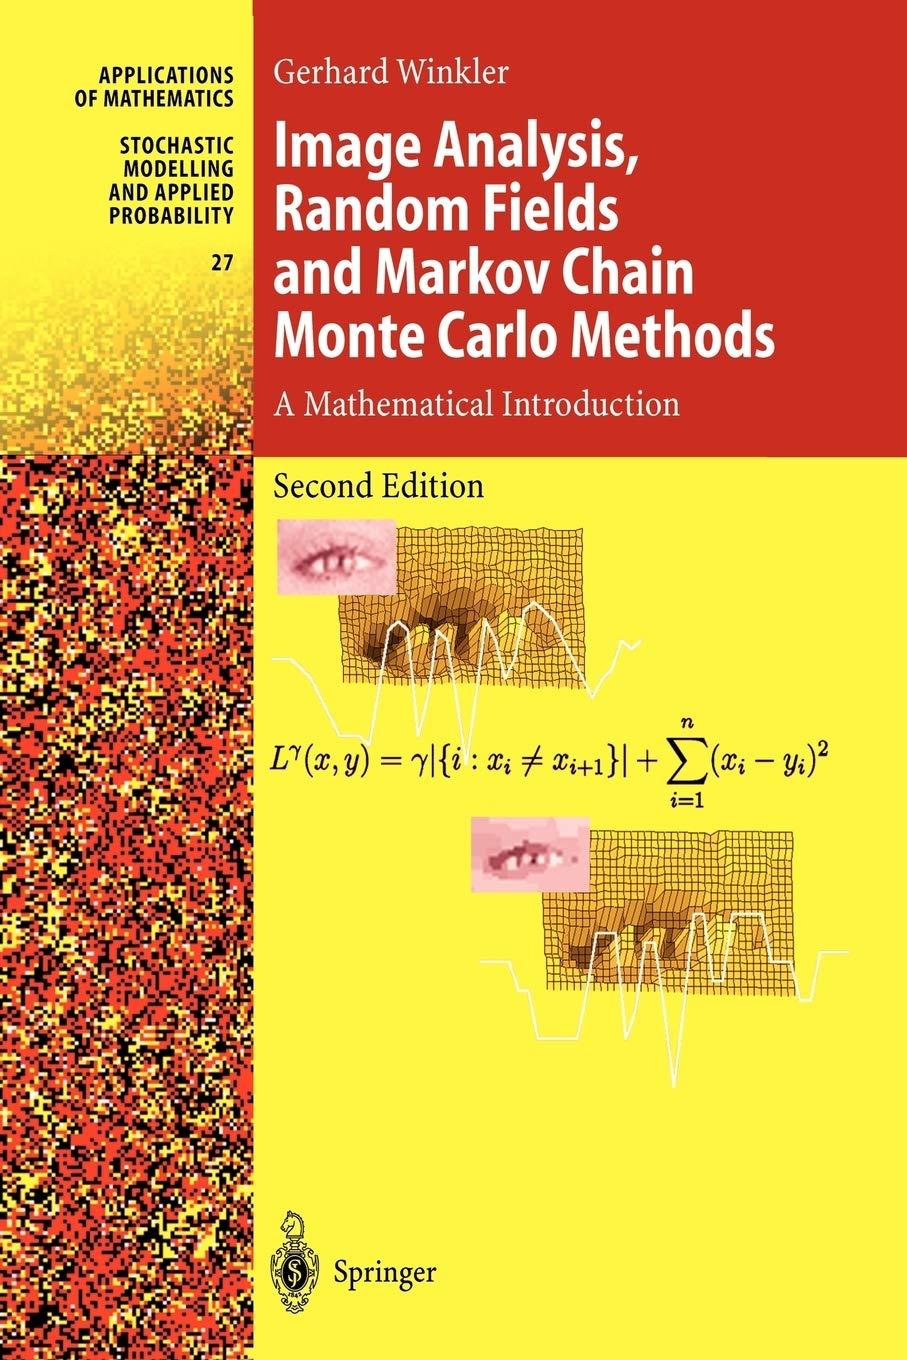 image analysis random fields and markov chain monte carlo methods 2nd edition gerhard winkler 3642629113,